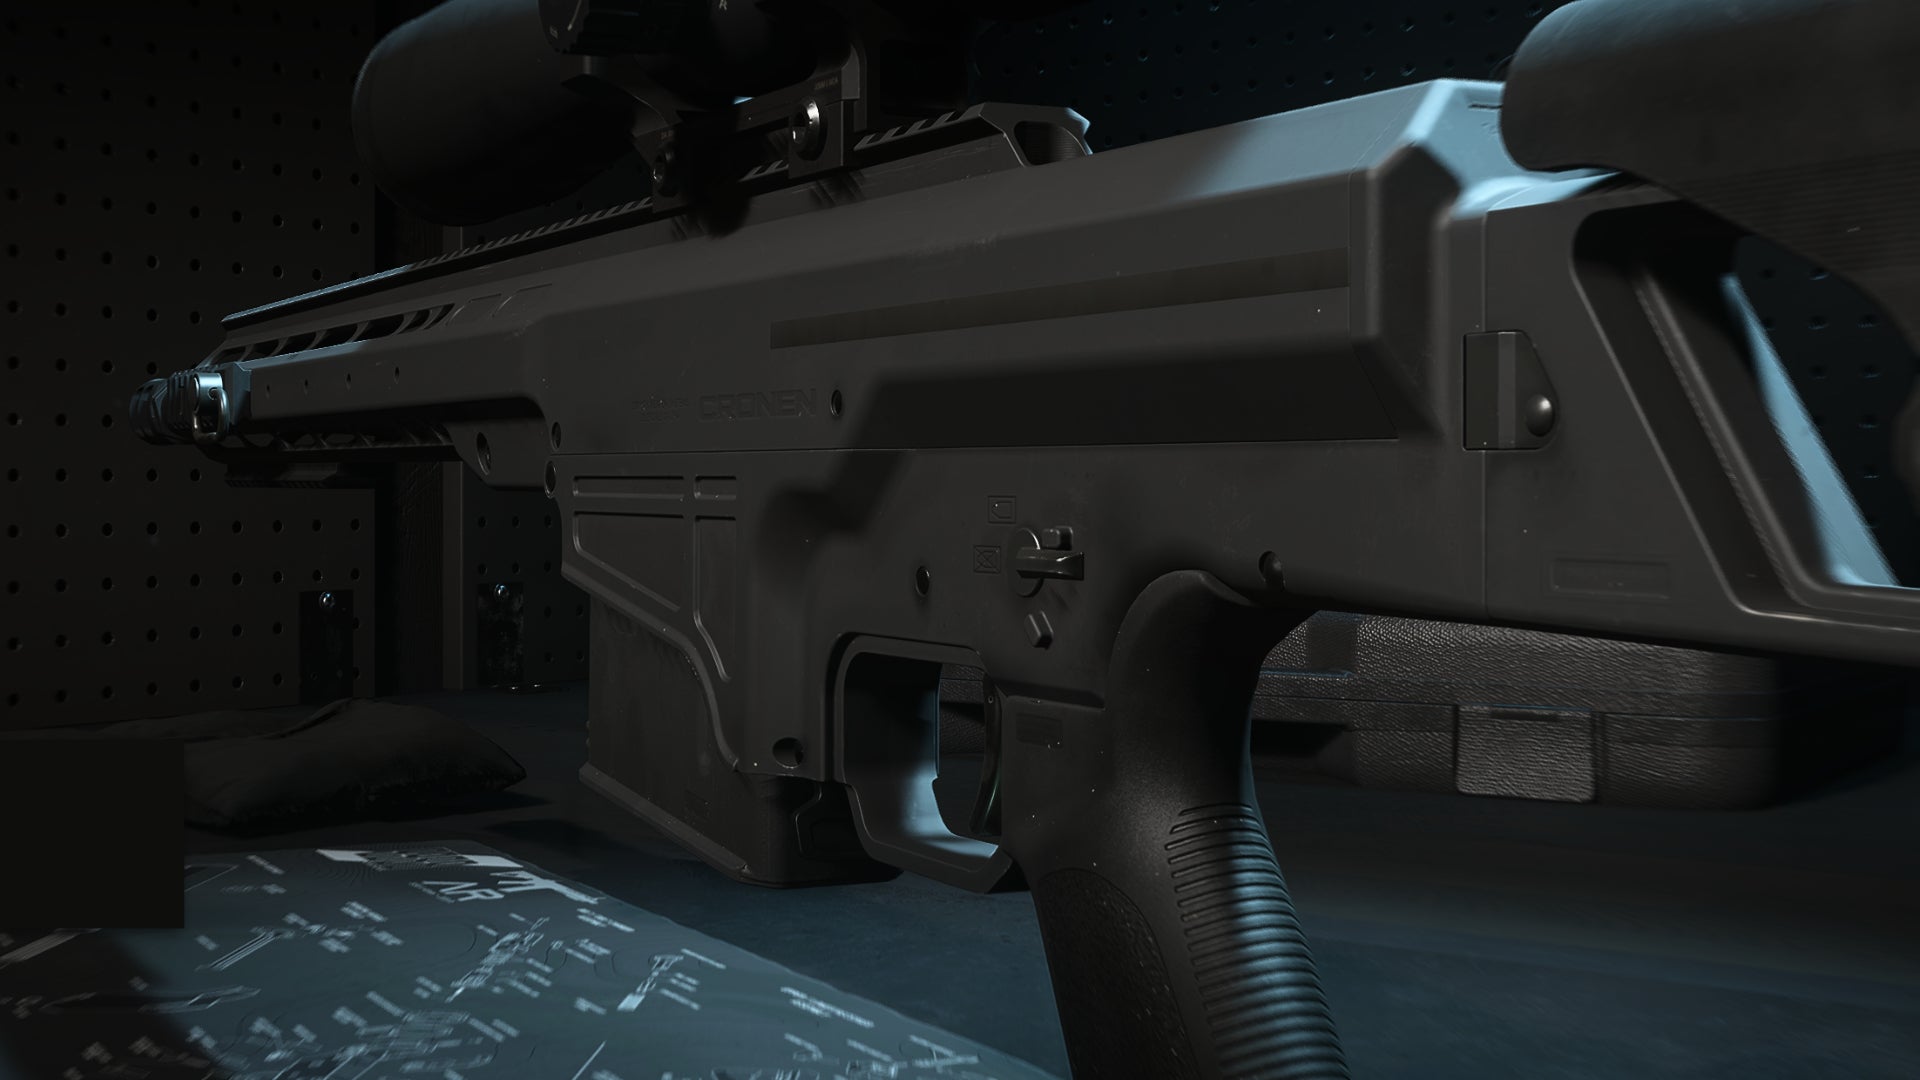 A close-up of the MCPR-300 Sniper Rifle in the Modern Warfare 2 Gunsmith screen.